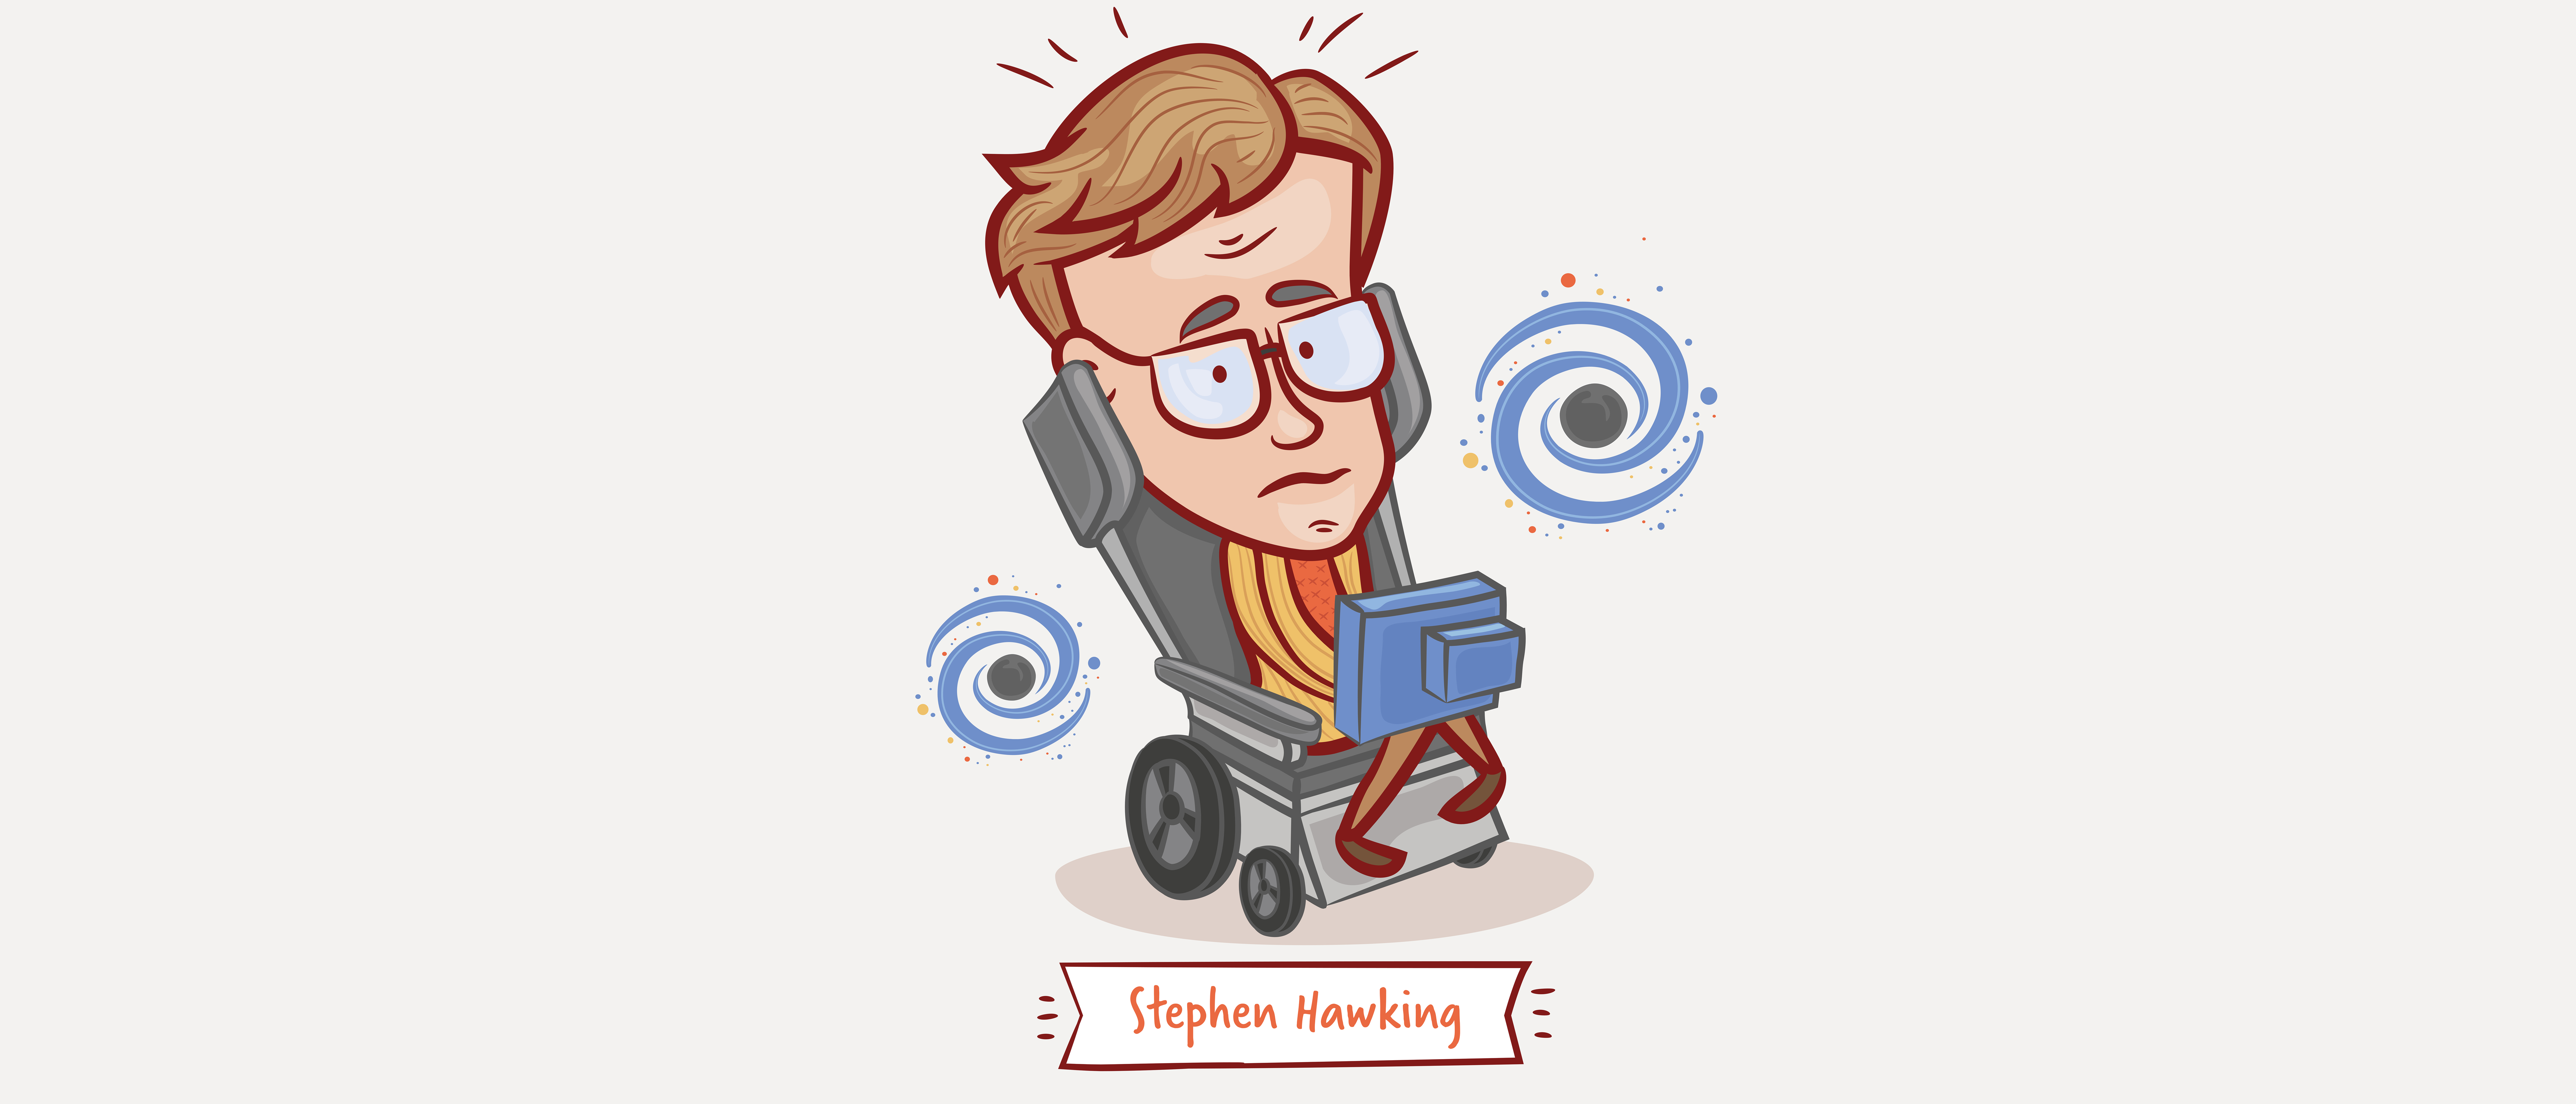 Kartoon profesora Stephena Hawkinga. Depositphotos.